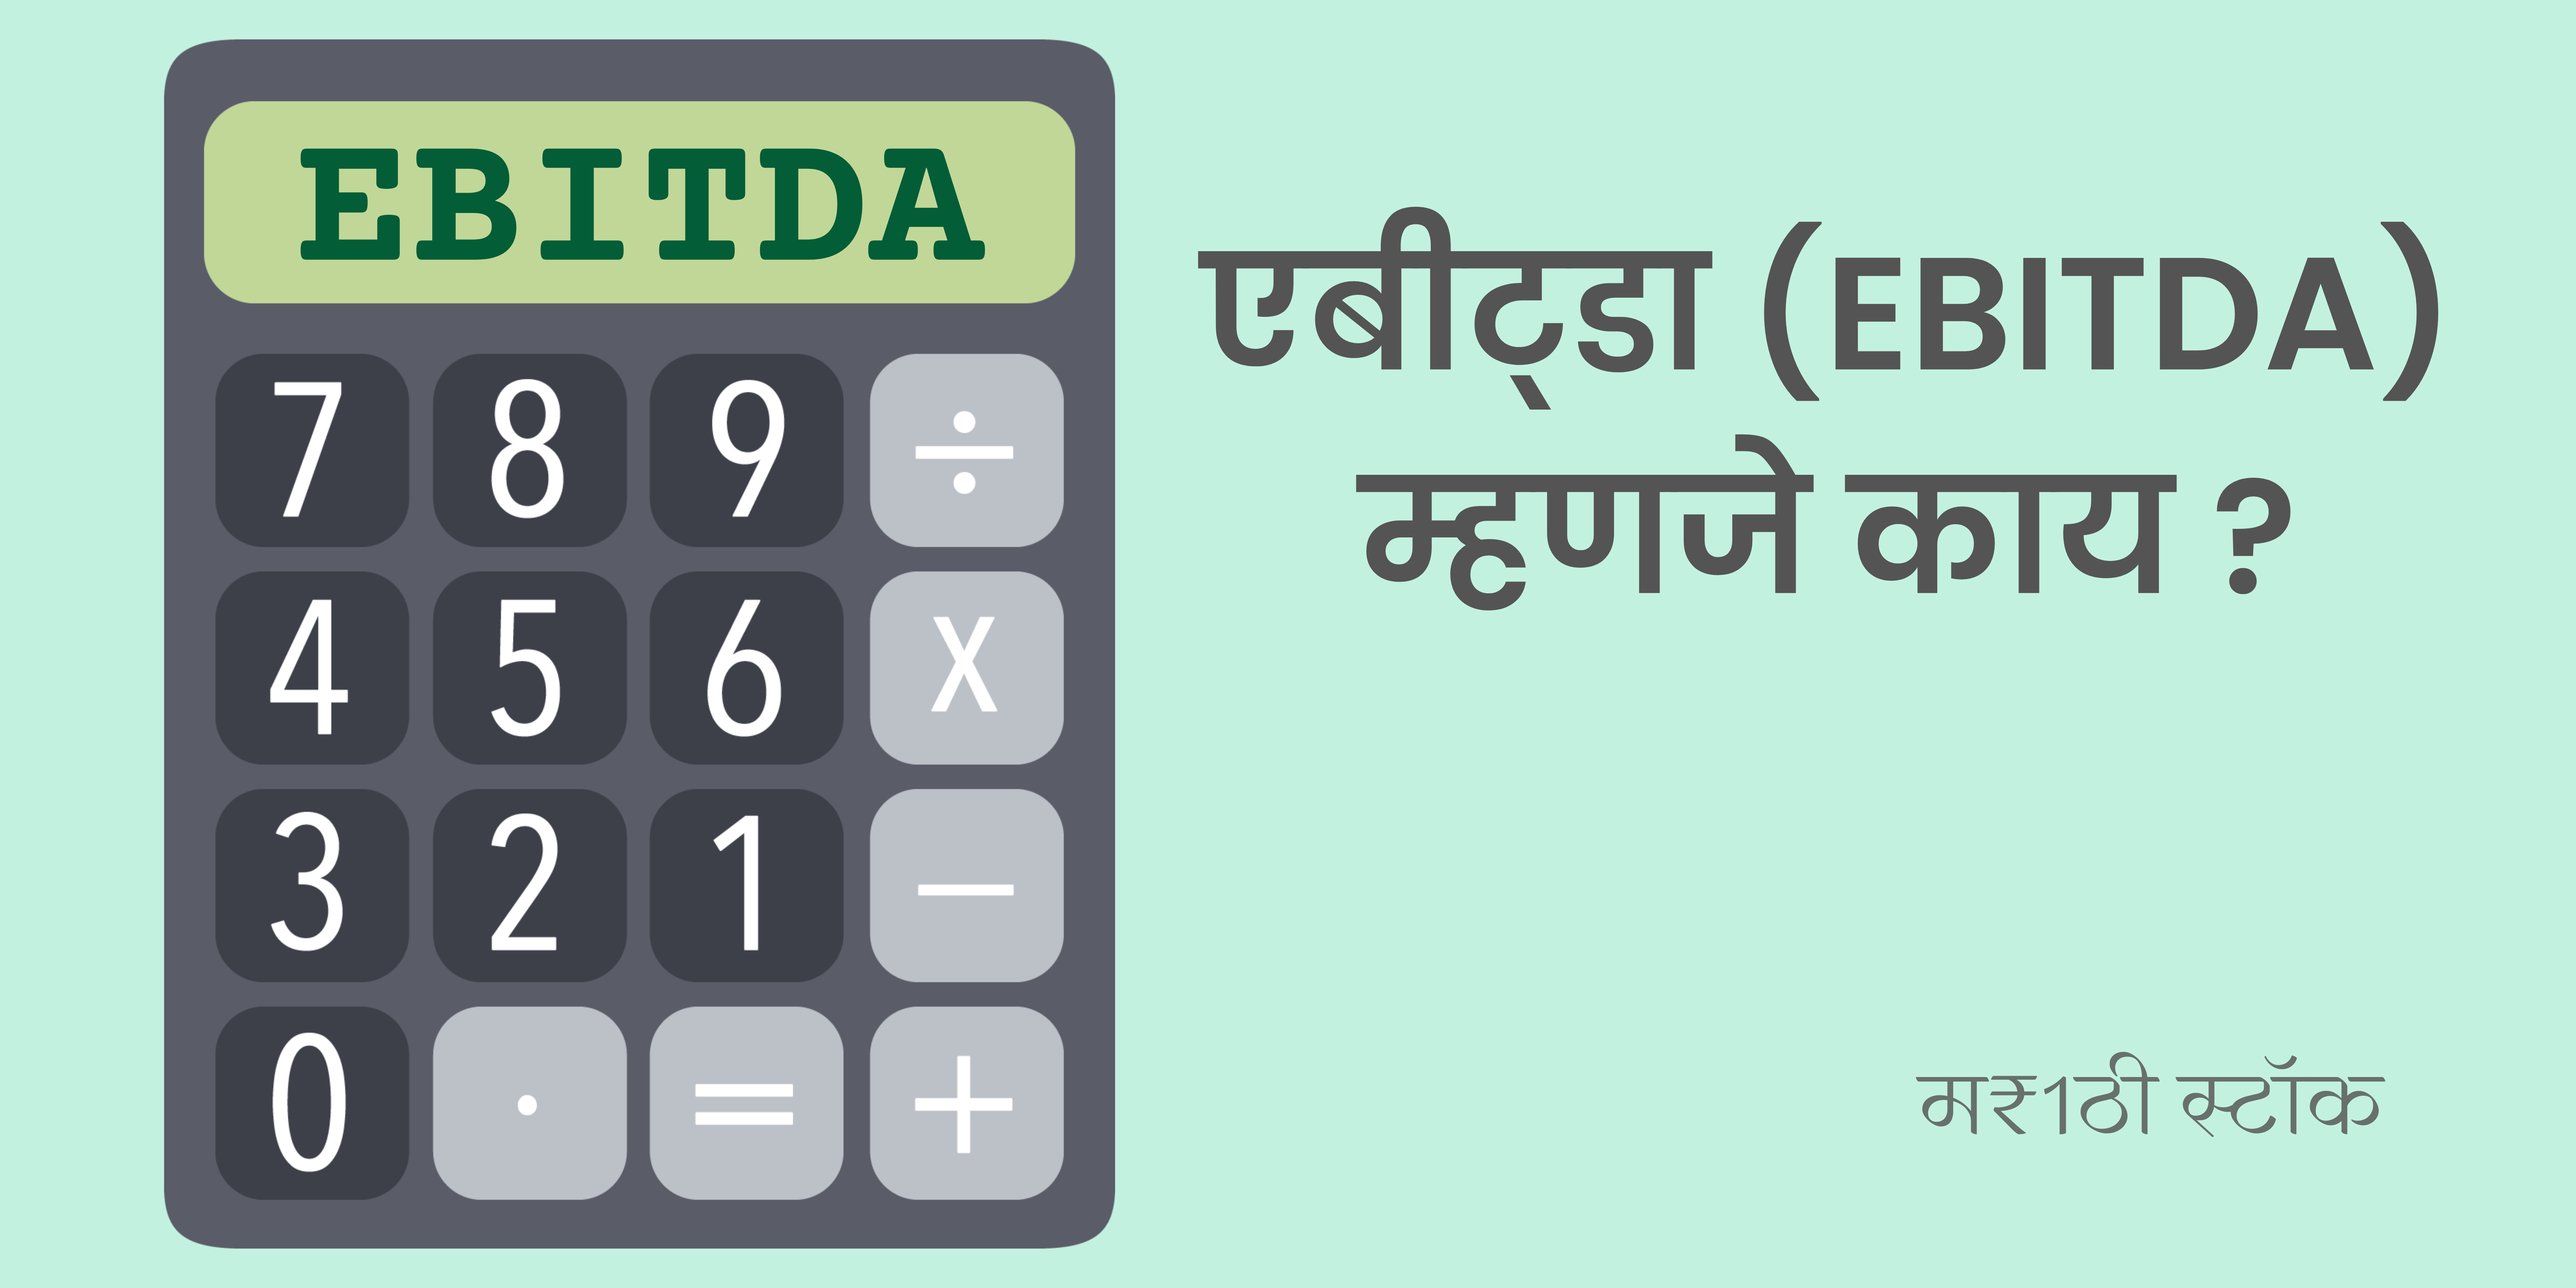 What is EBITDA in marathi